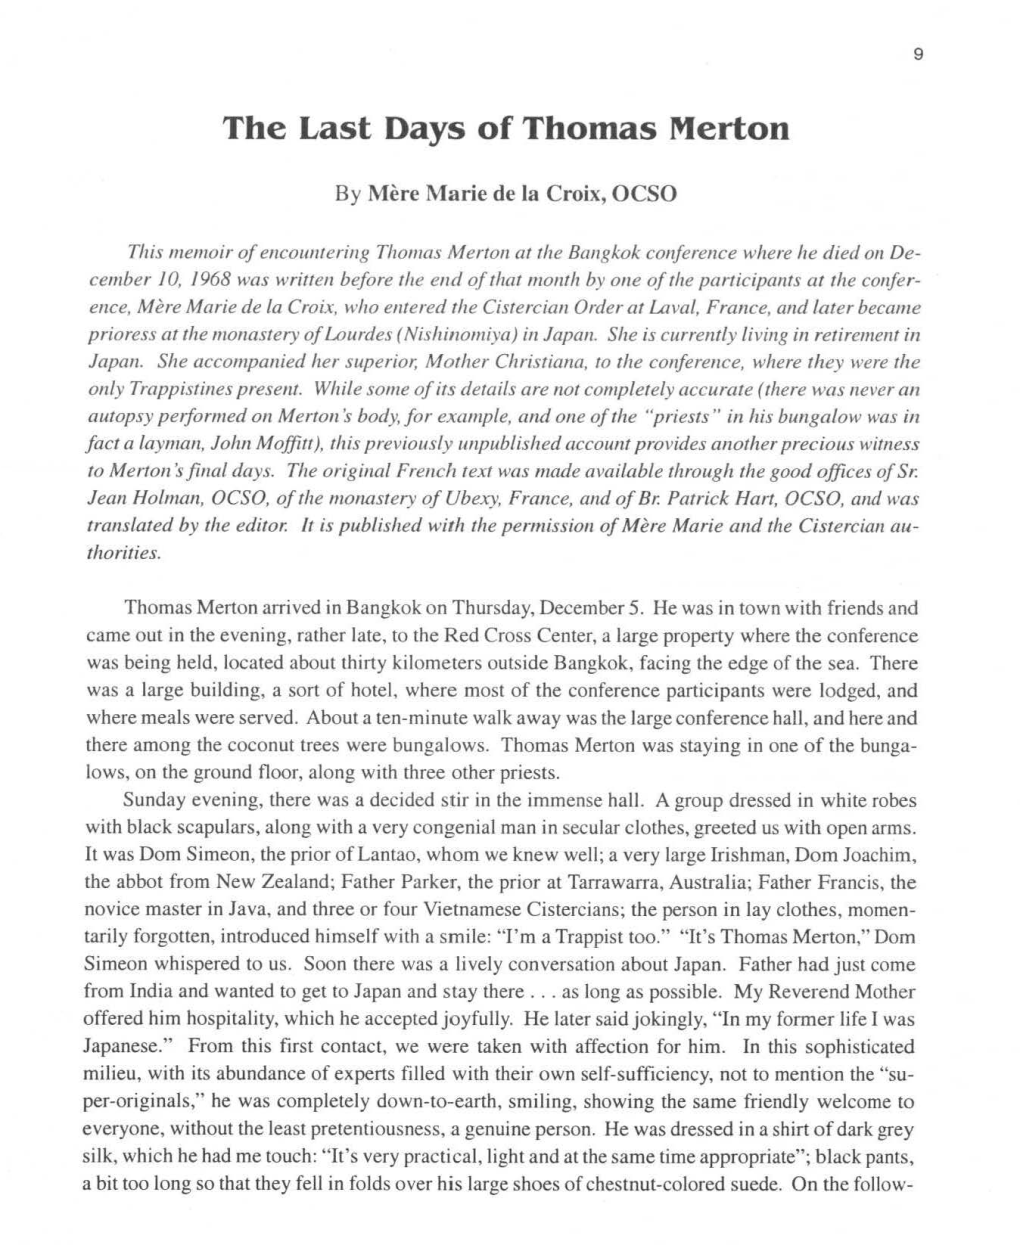 The Last Days of Thomas Merton